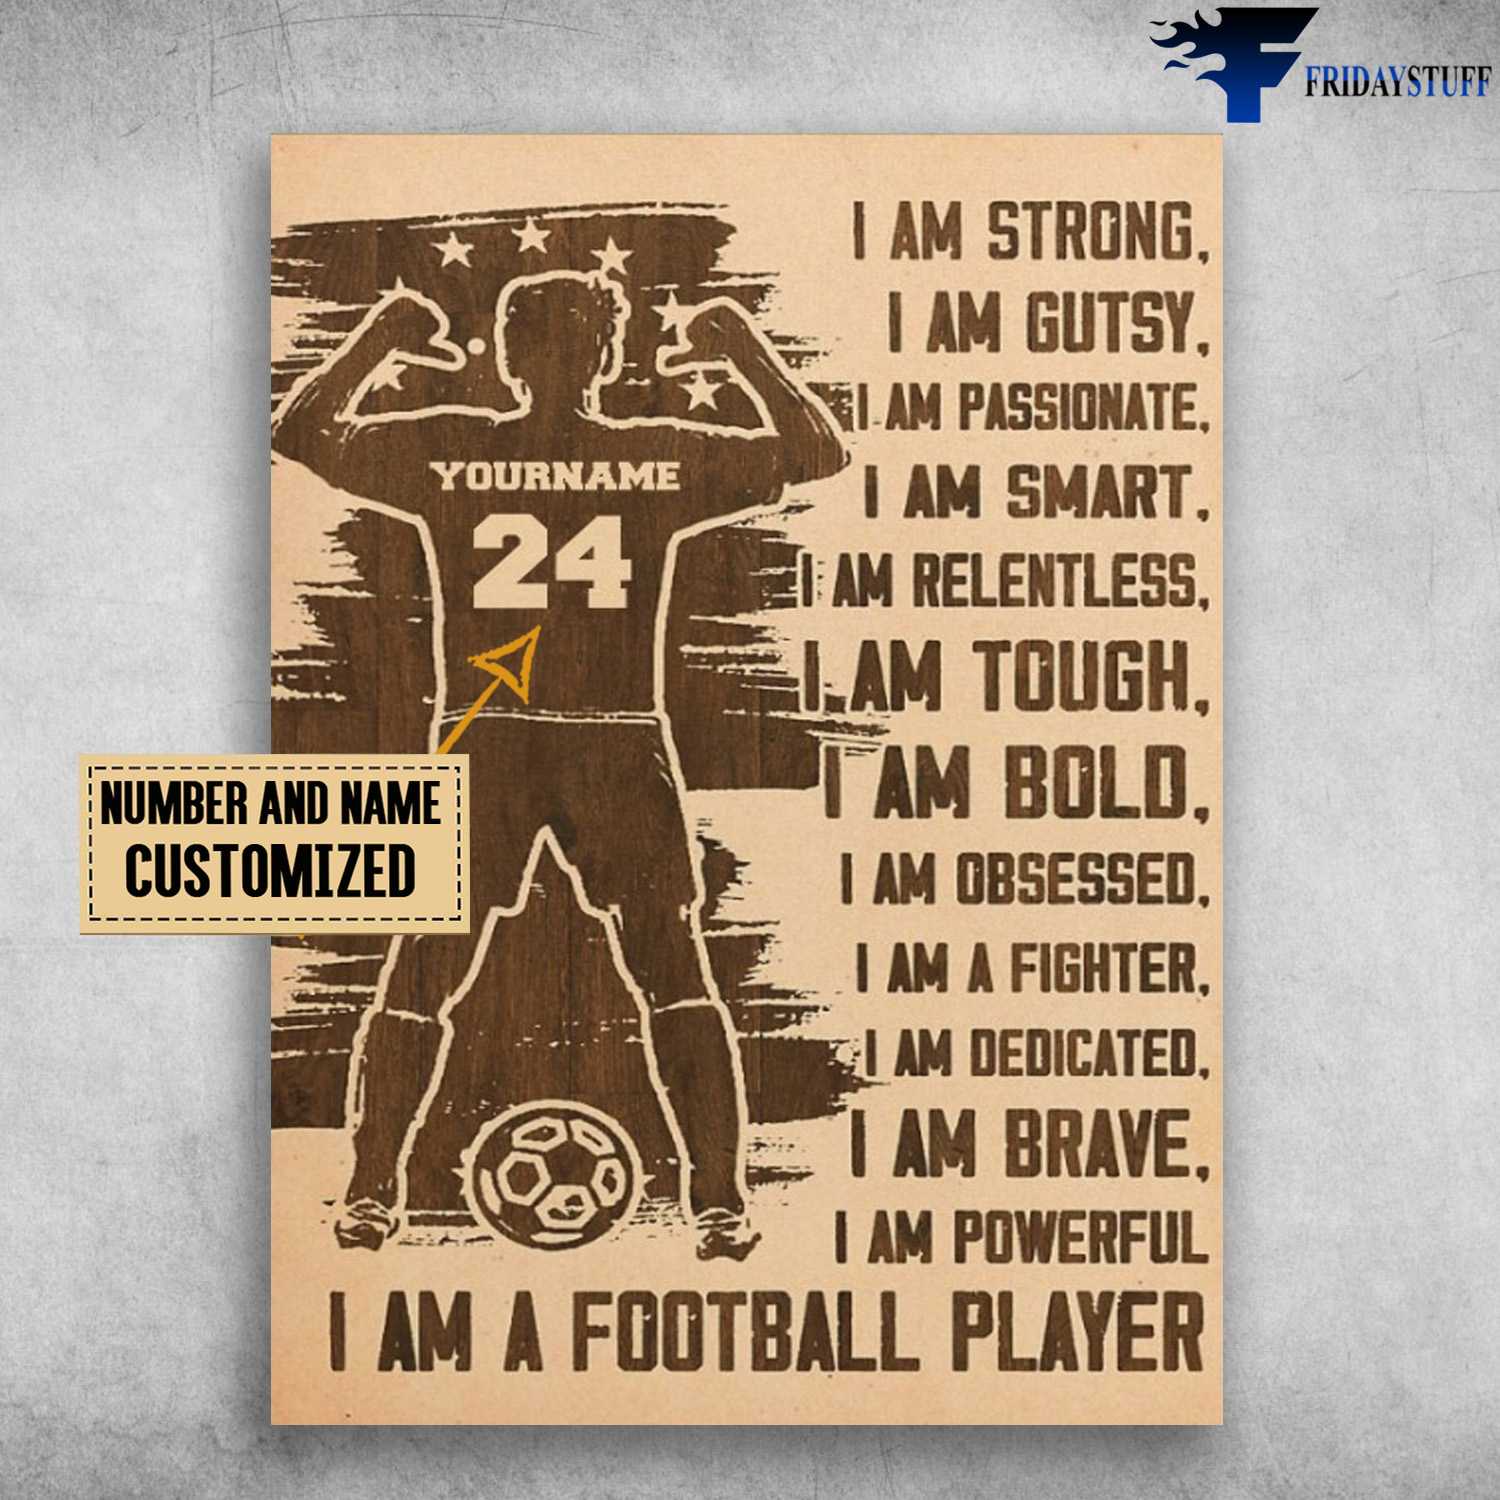 Soccer Player, Soccer Poster, I Am Strong, I Am Gutsy, I Am Passionate, I Am Smart, I Am Relentless